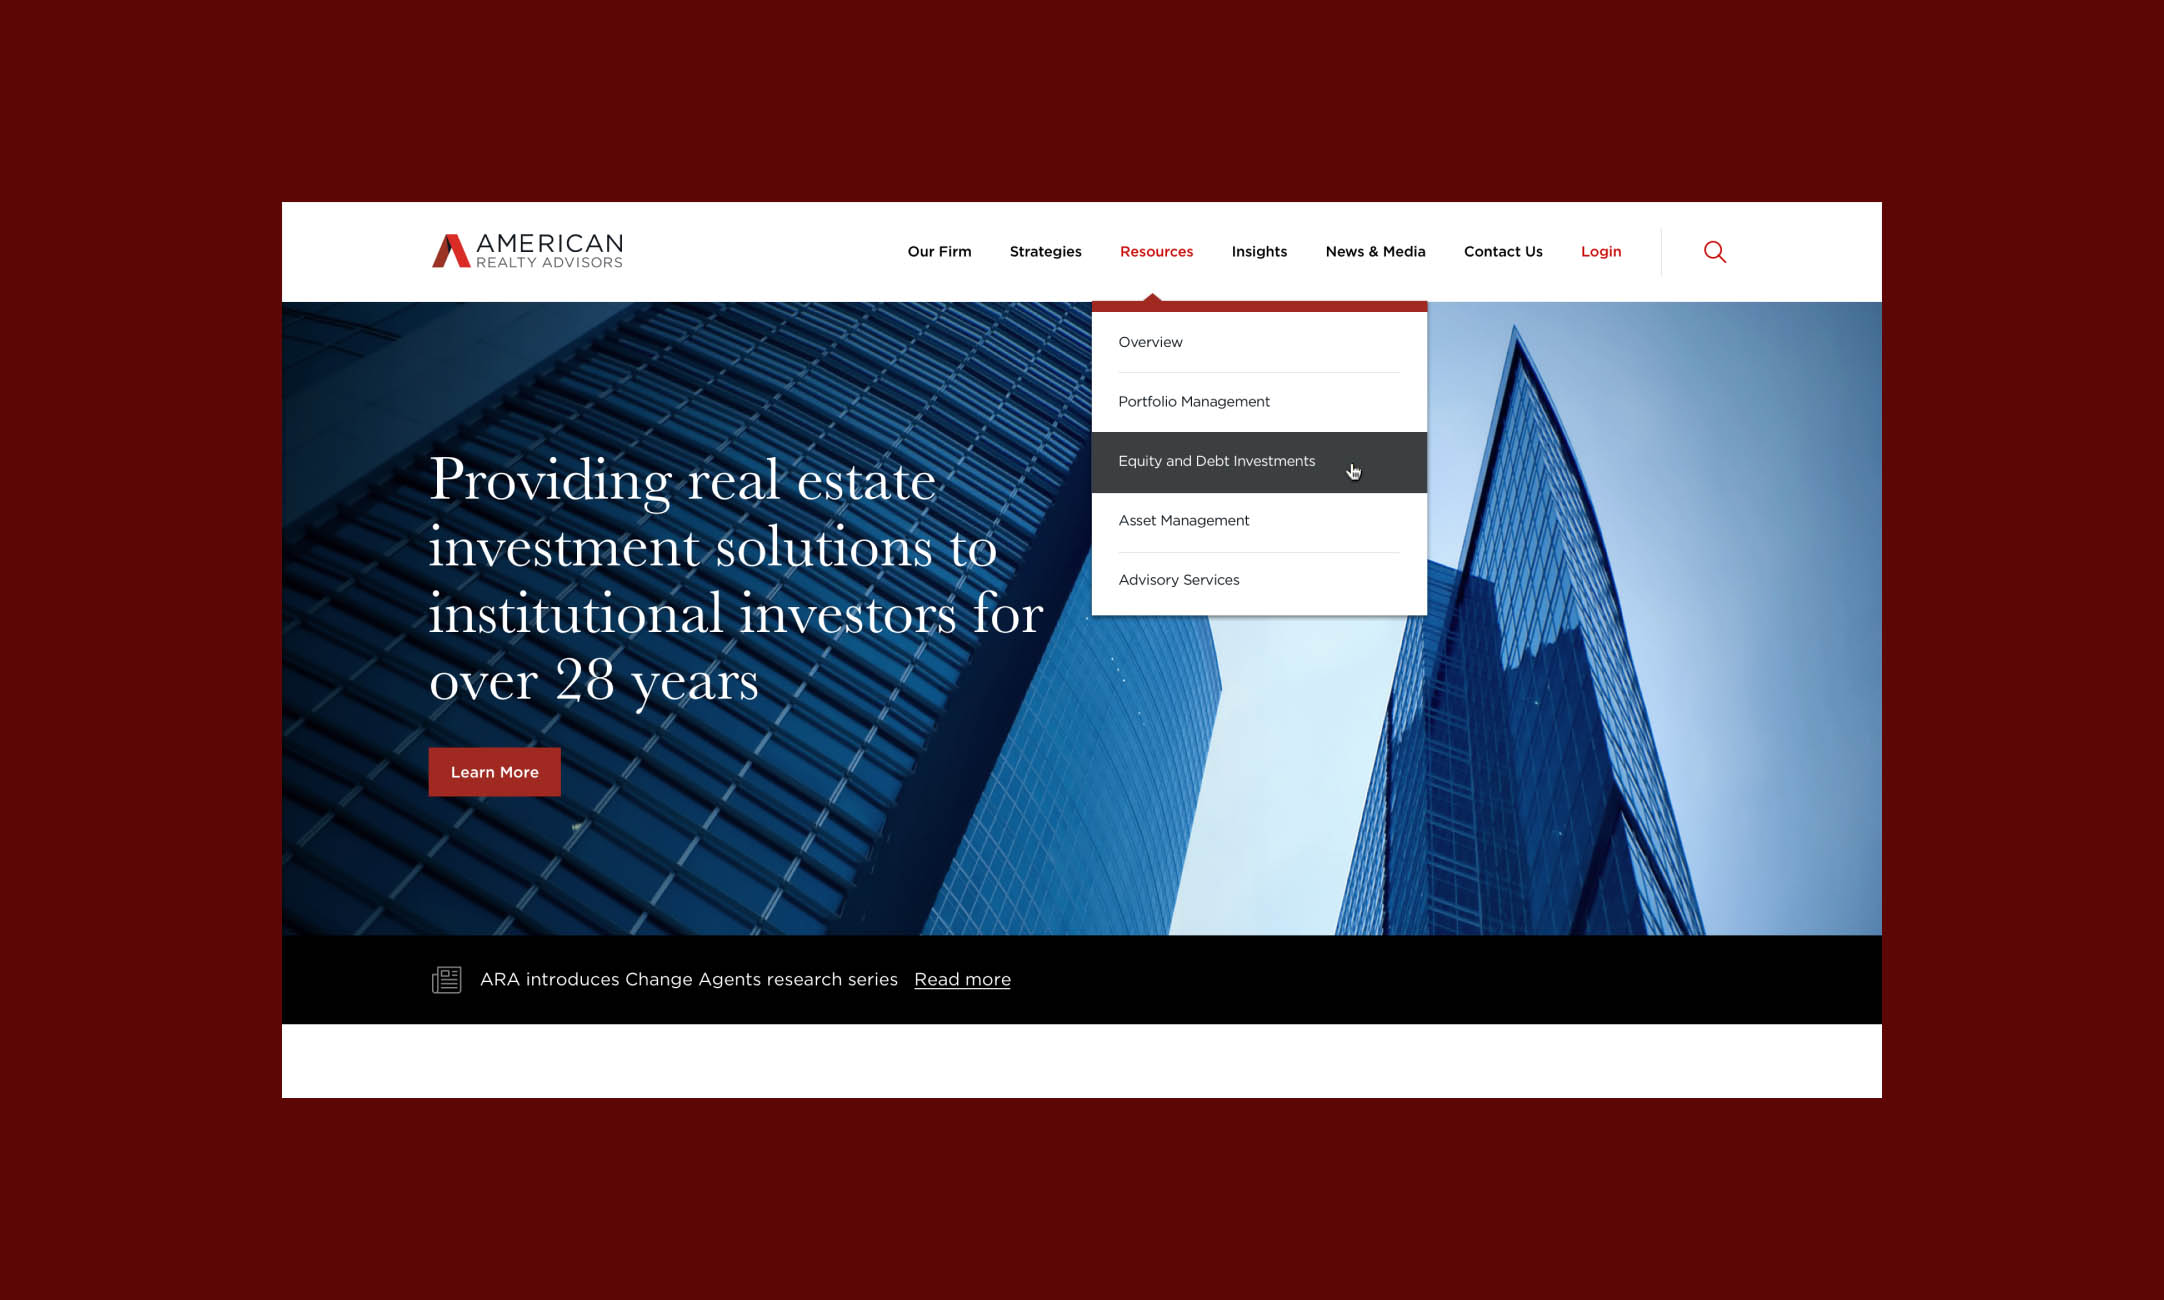 Digital Investment for Institutional Real Estate Investors Build Image-1